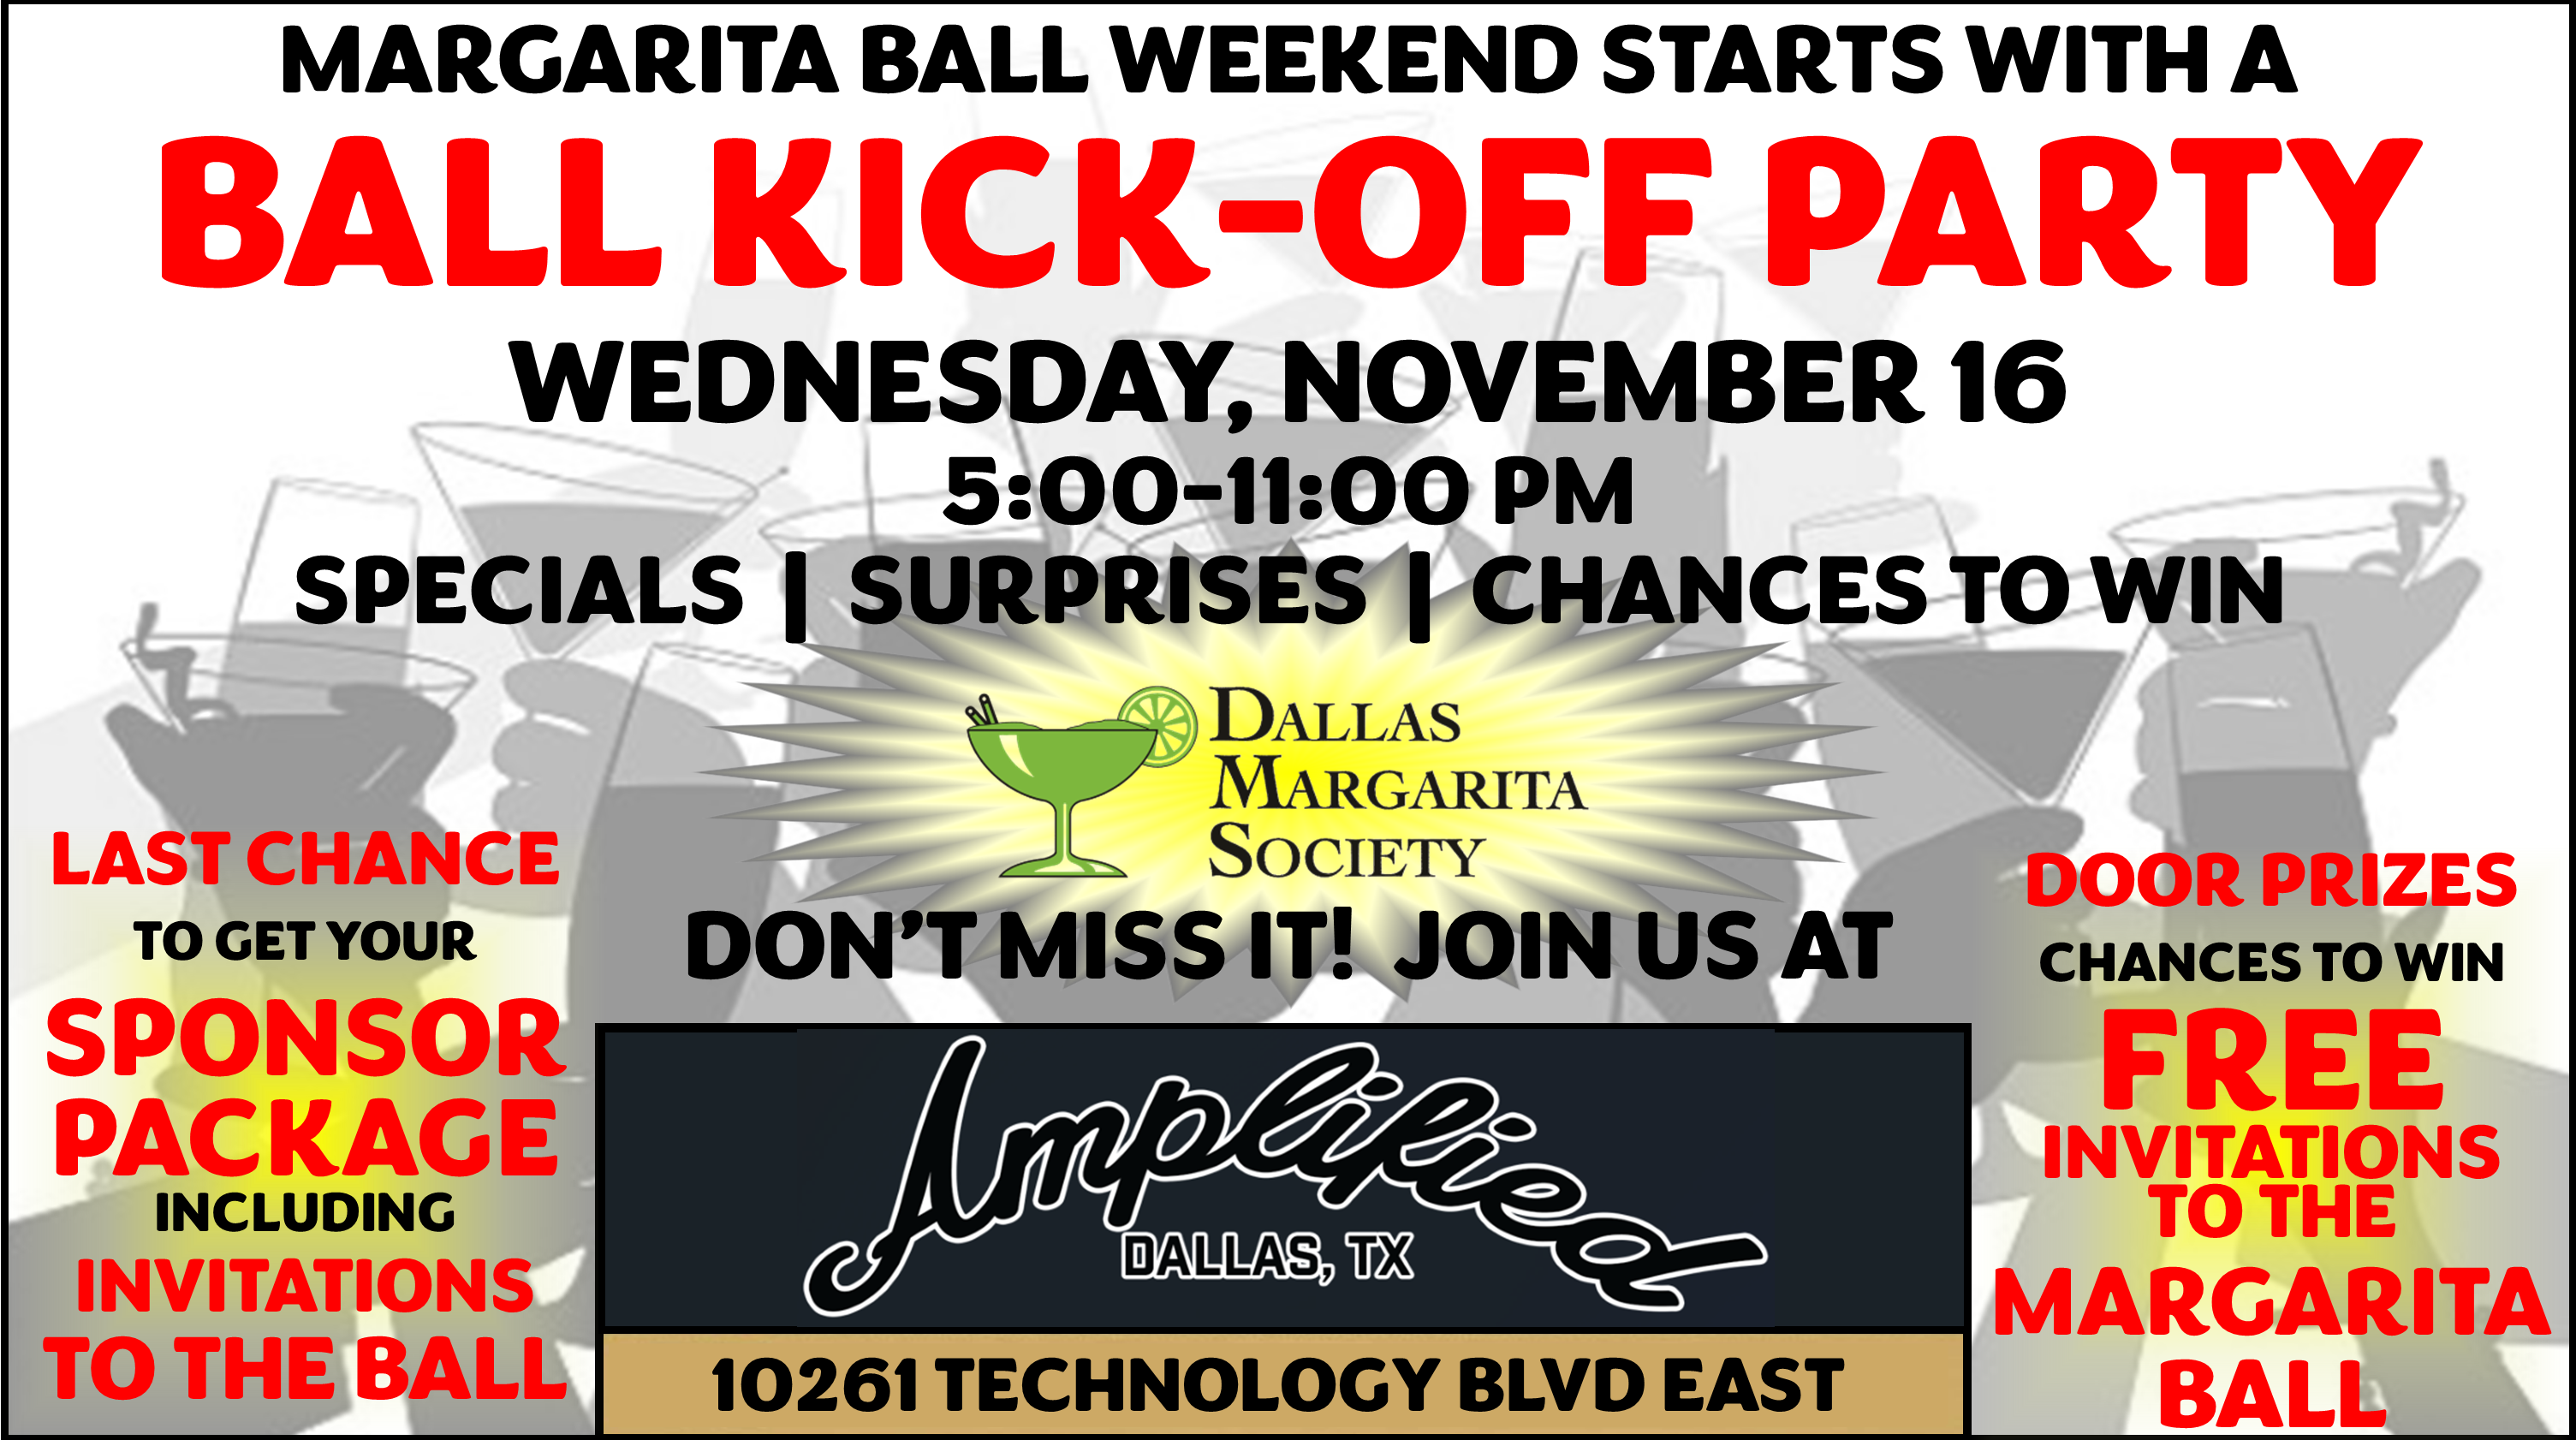 Margarita Ball Kick-Off Party